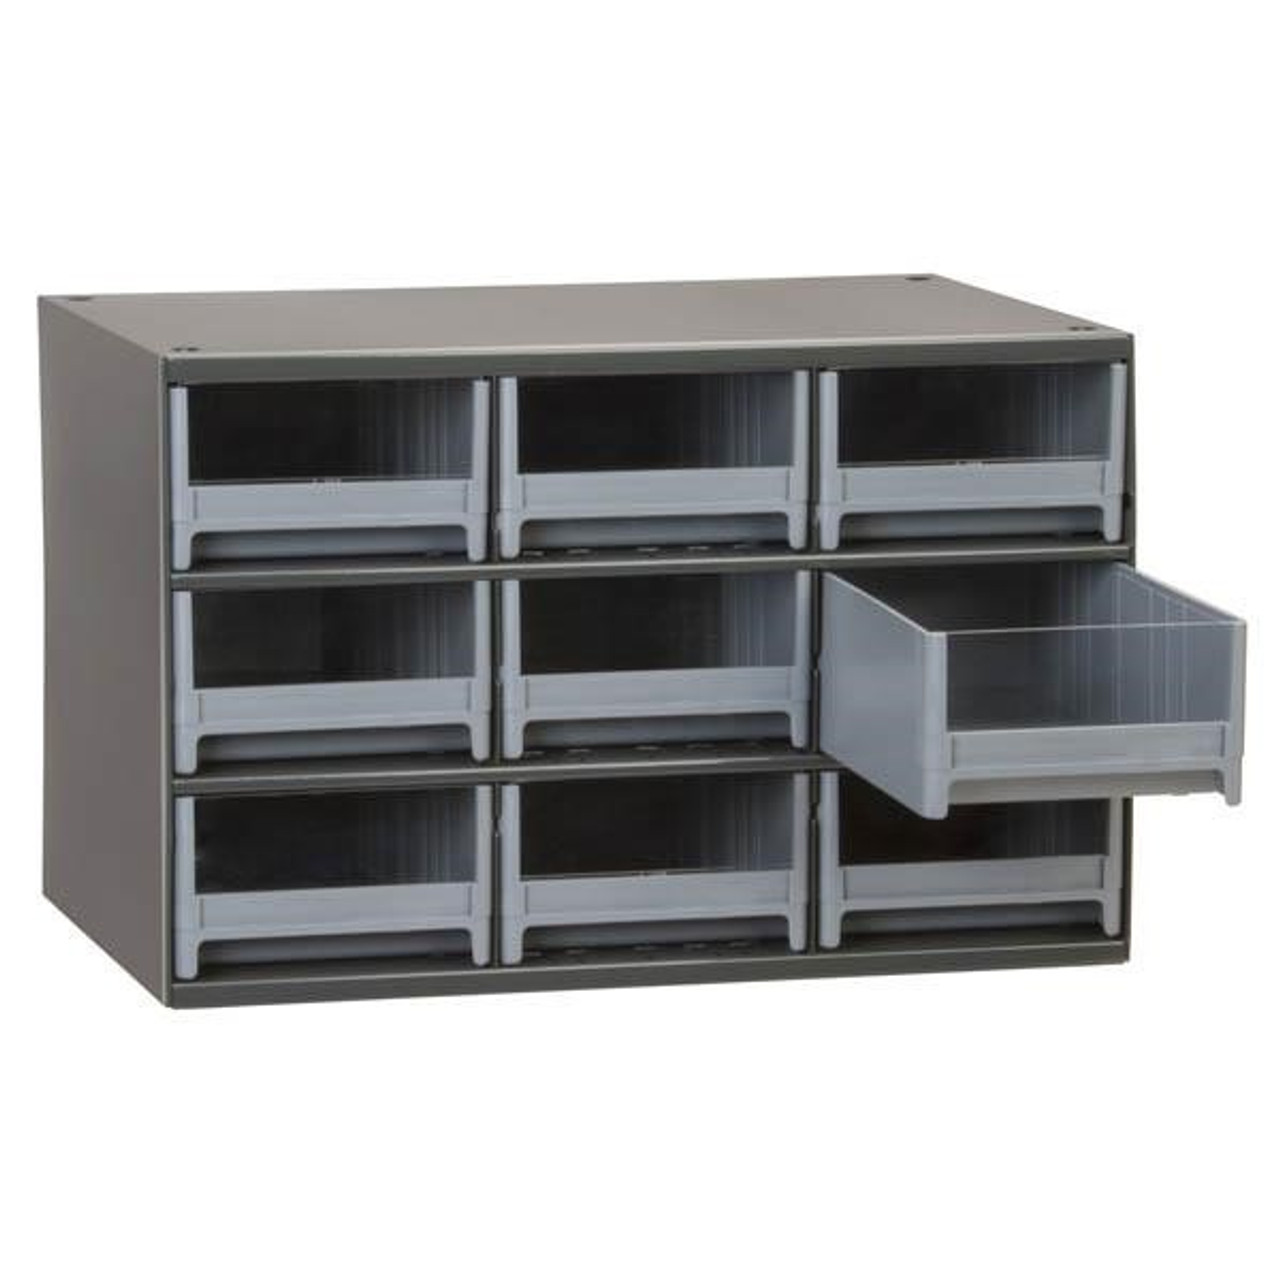 Akro-Mils 19-Series Heavy-duty Steel Storage Cabinets No of drawers: 20;